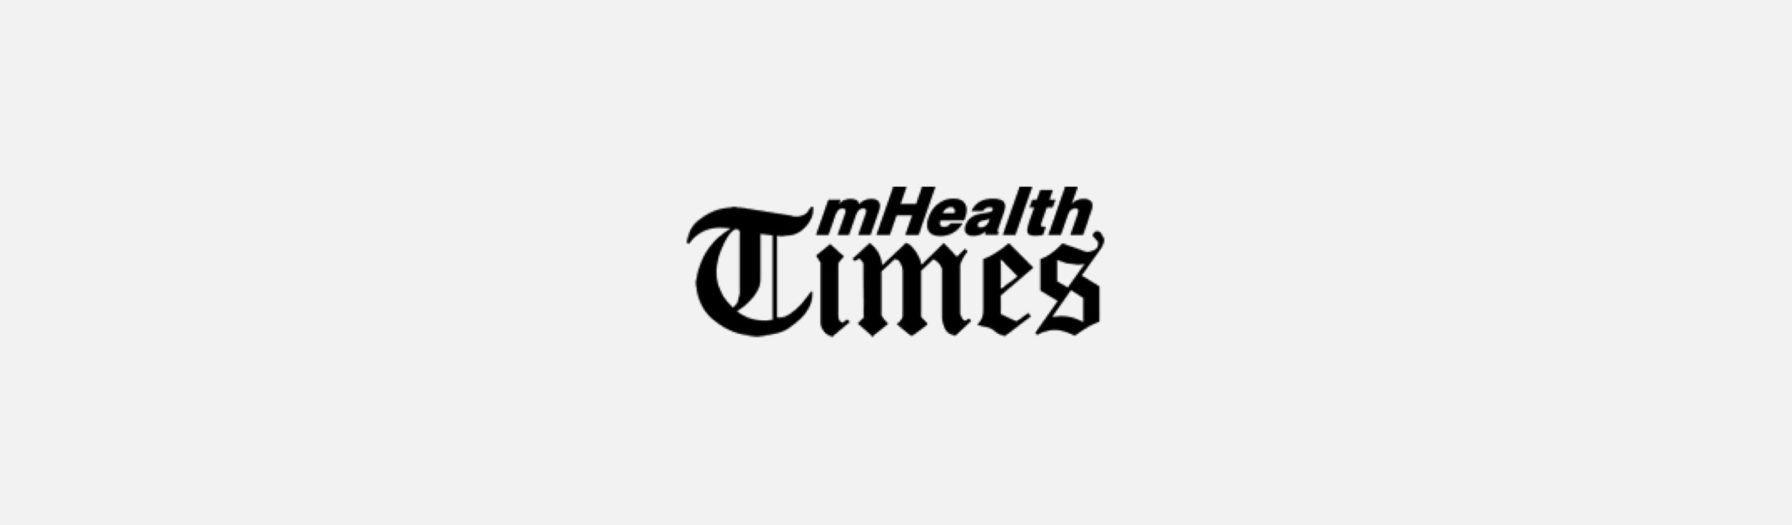  Mobile Health Times logo